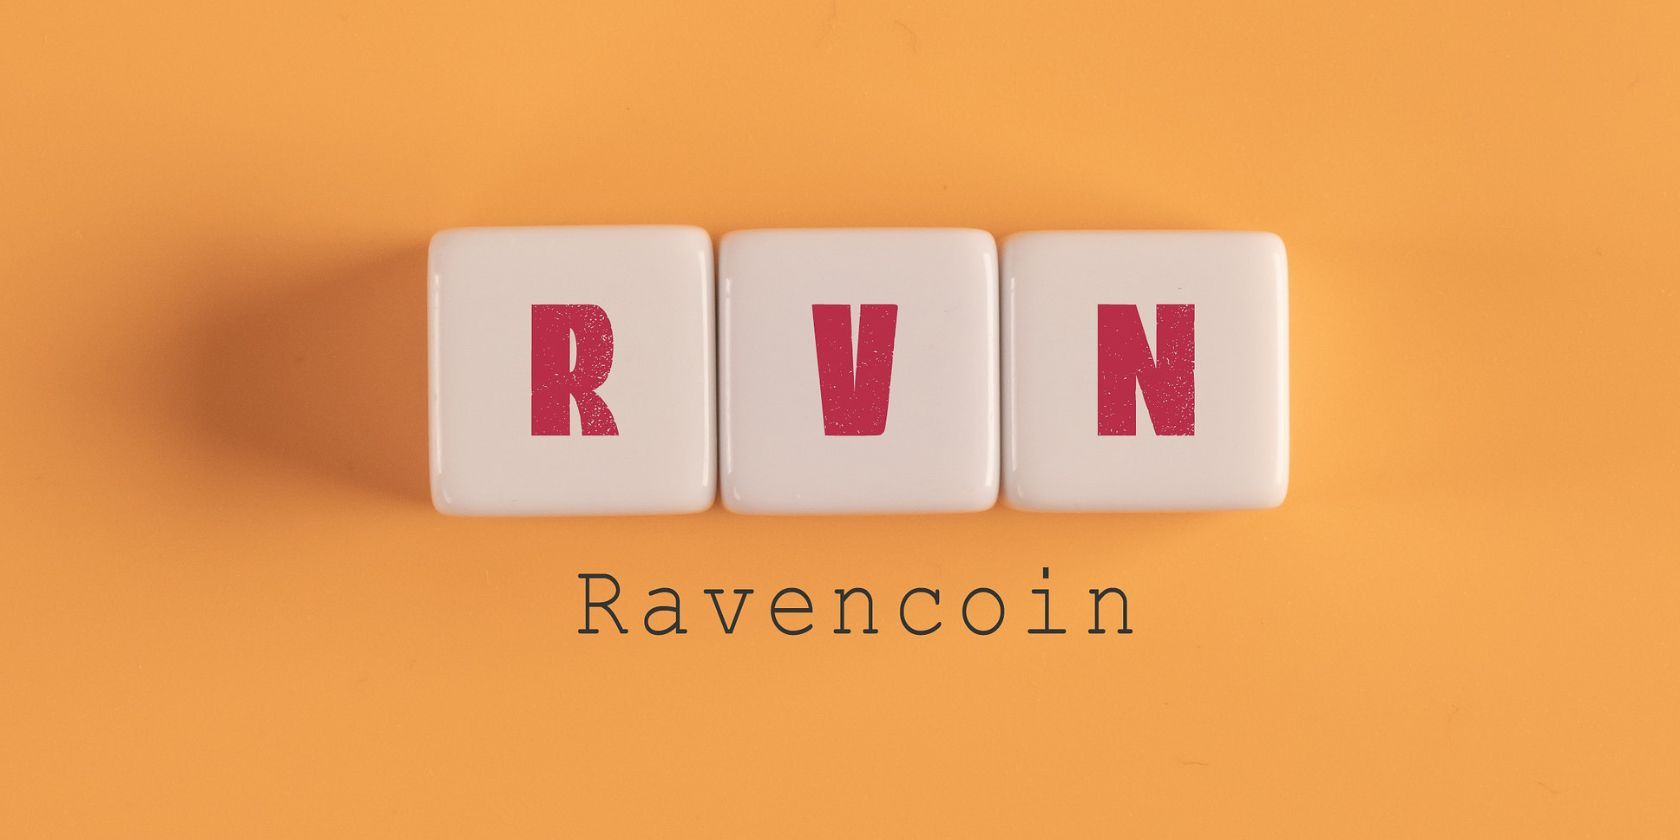 ravencoin abbreviated using scrabble pieces